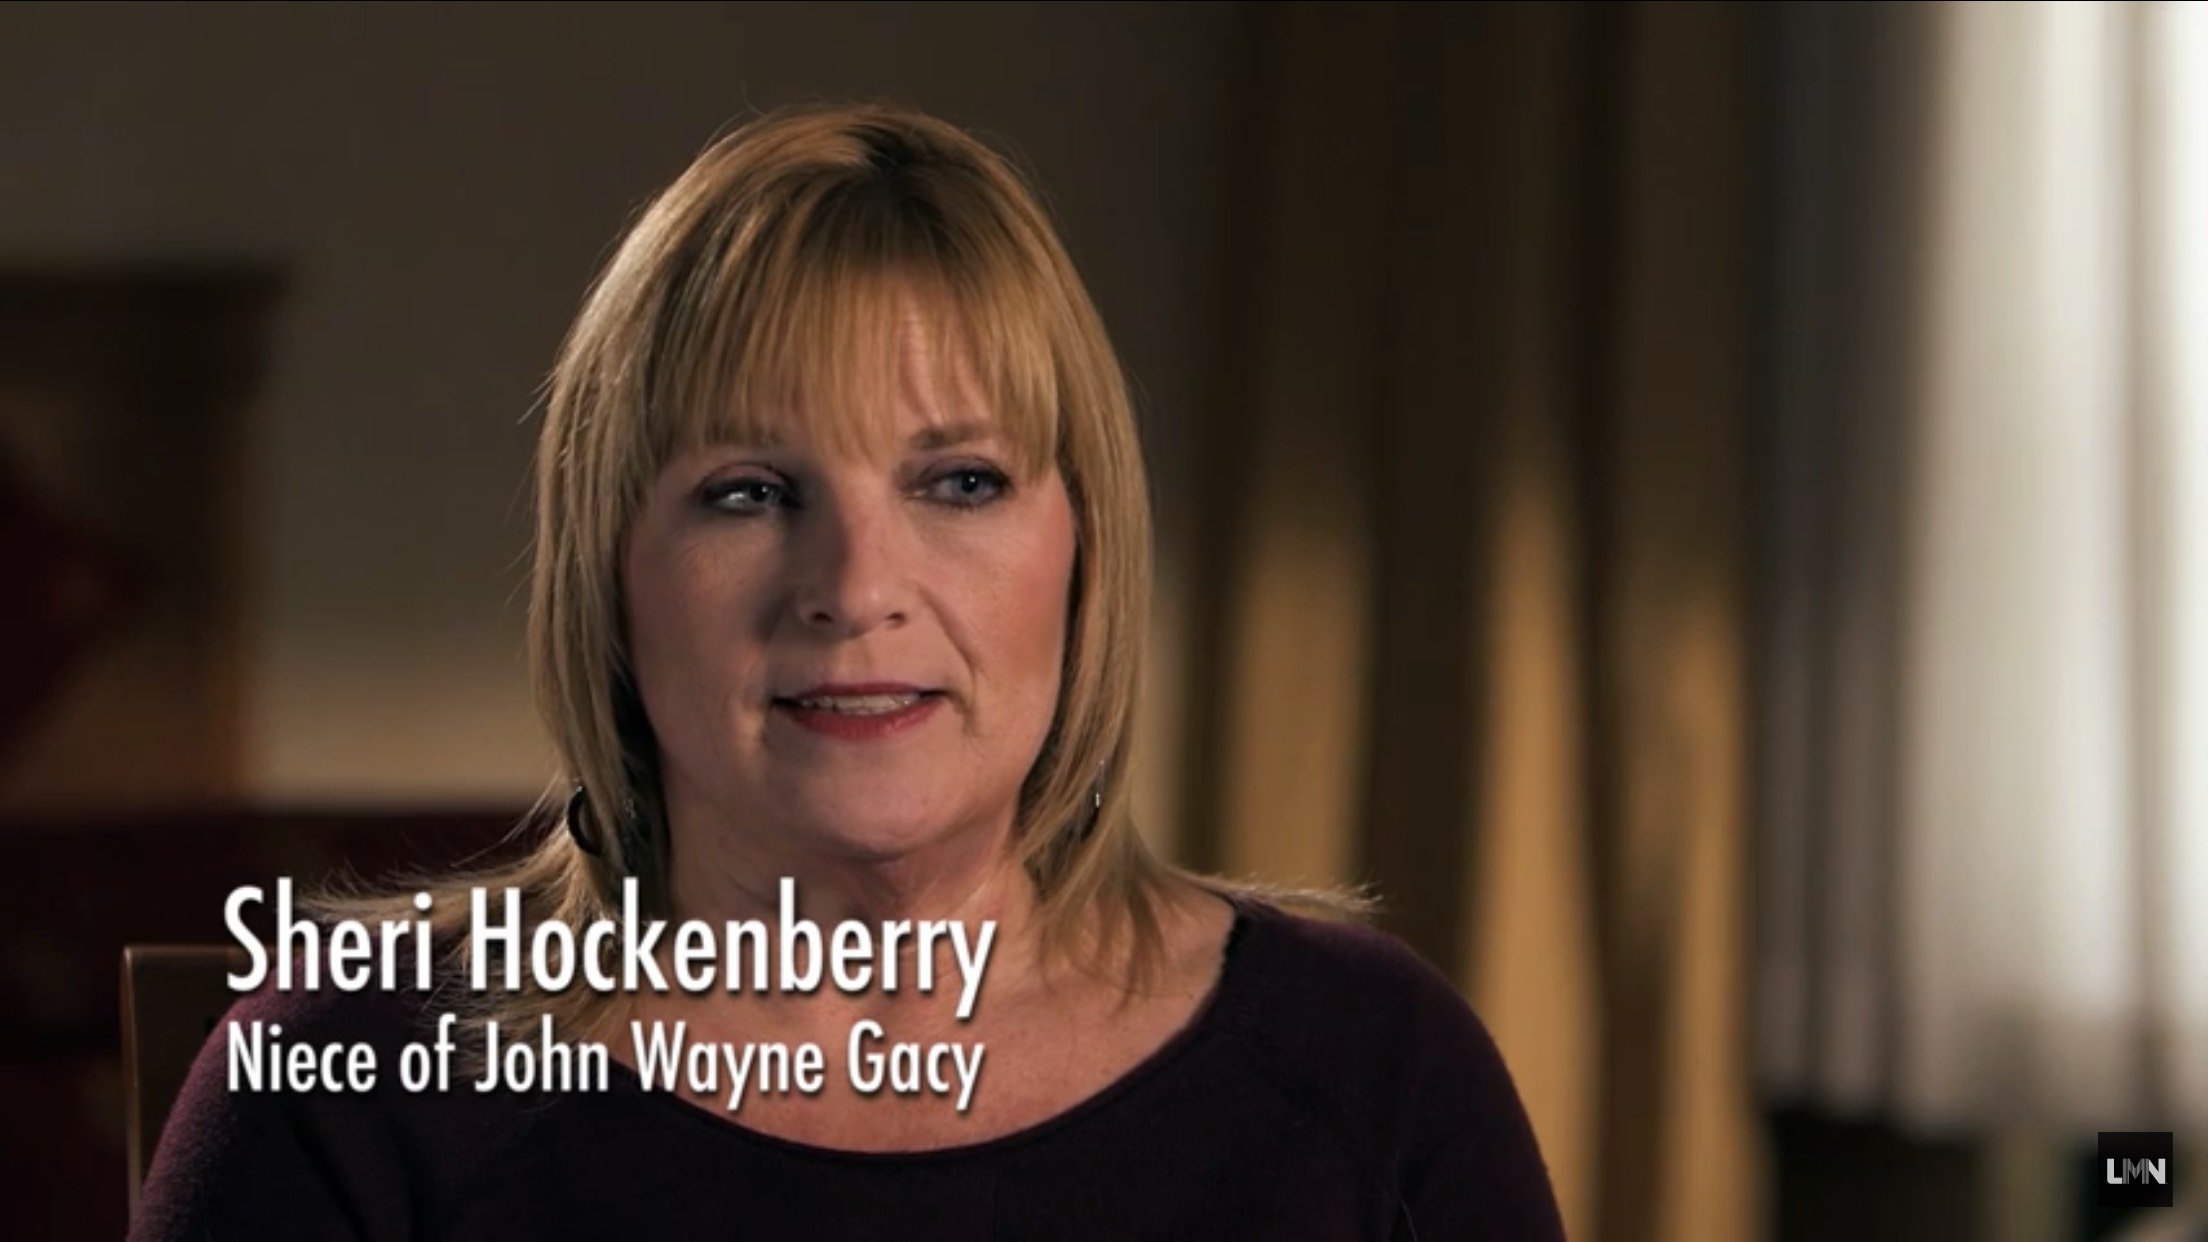 Sheri Hockenberry, John Wayne Gacy's niece, during an interview in 2015 | Source: YouTube/ LMN